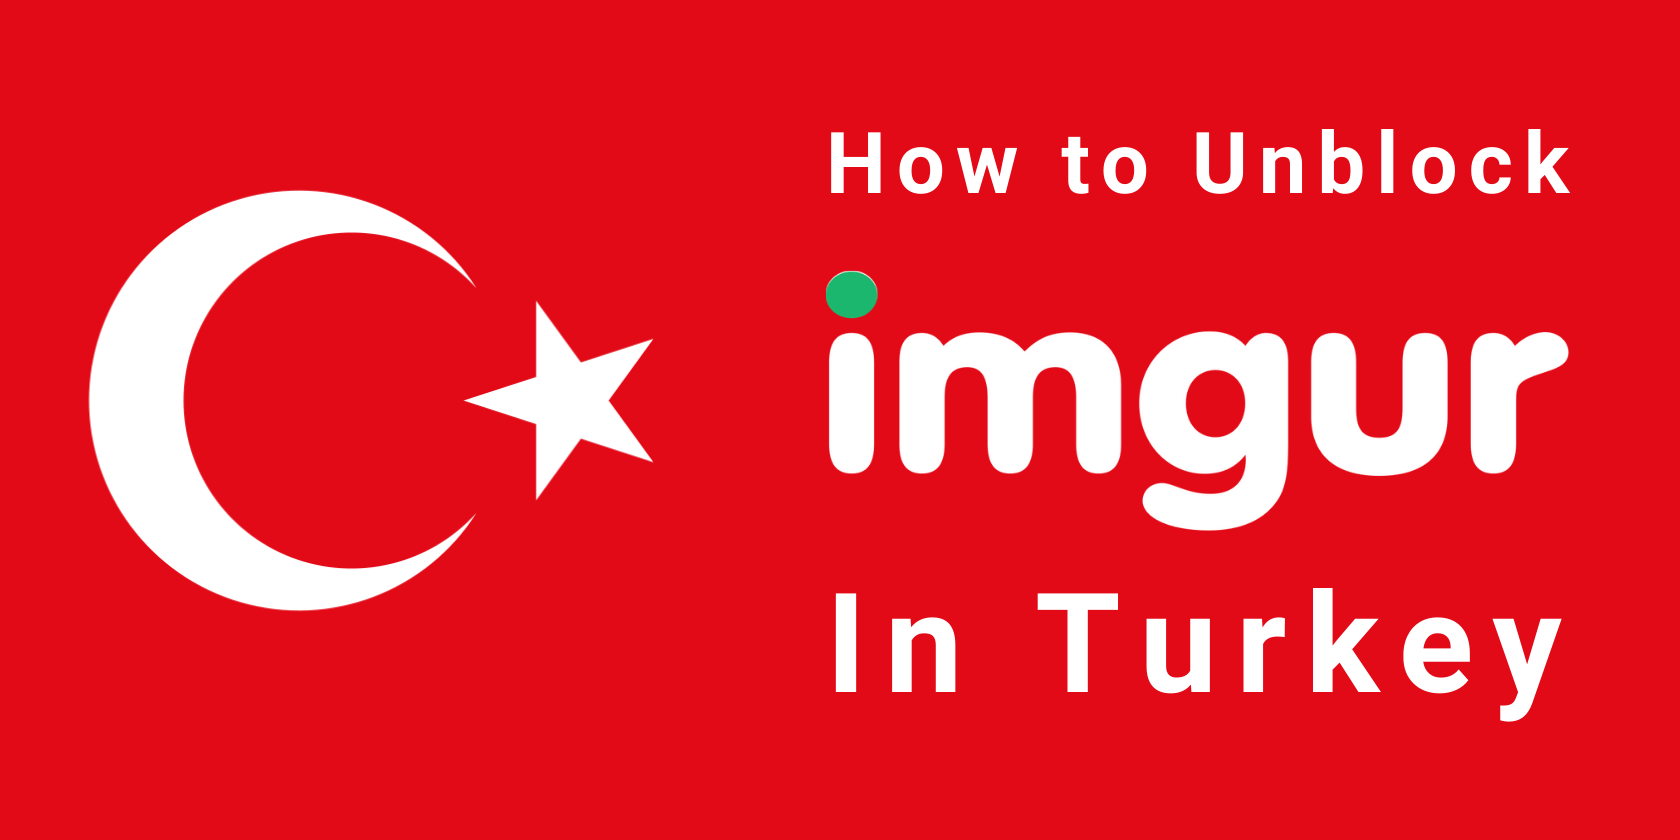 Unblock Imgur in Turkey